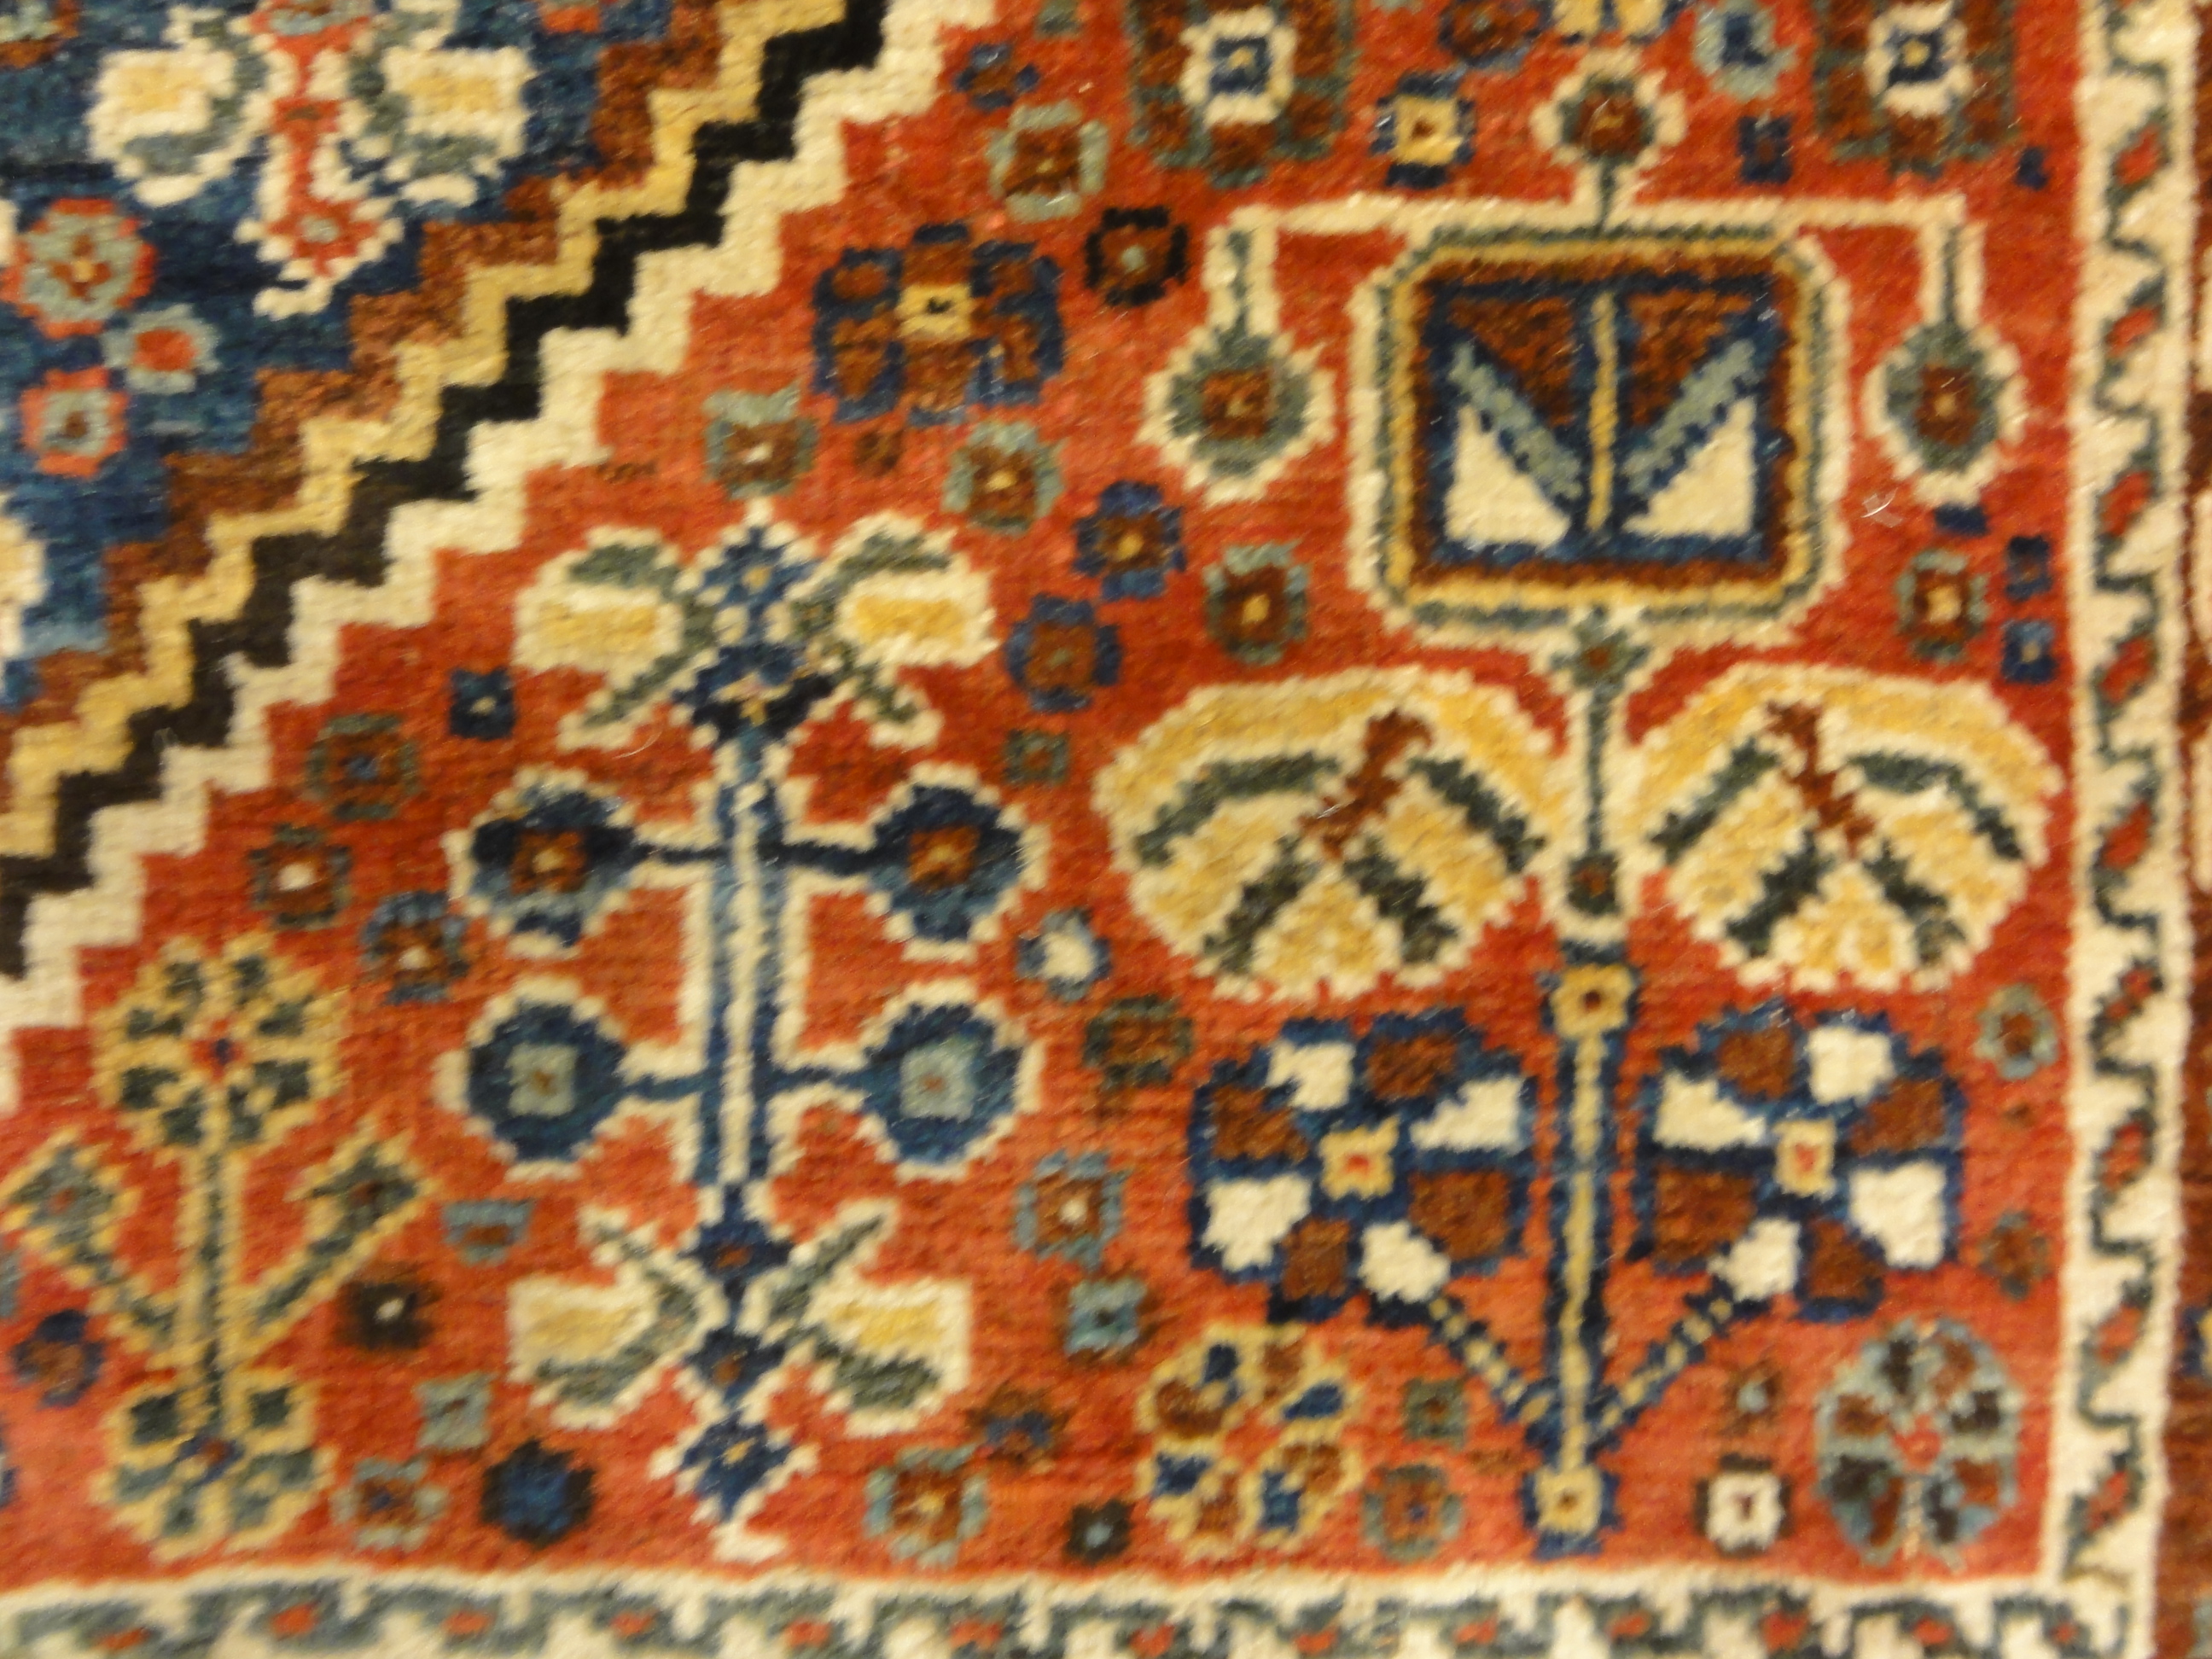 Antique Persian Qashgai Woven Circa 1890 Genuine Authentic Intricate Woven Carpet Art Santa Barbara Design Center Rugs and More